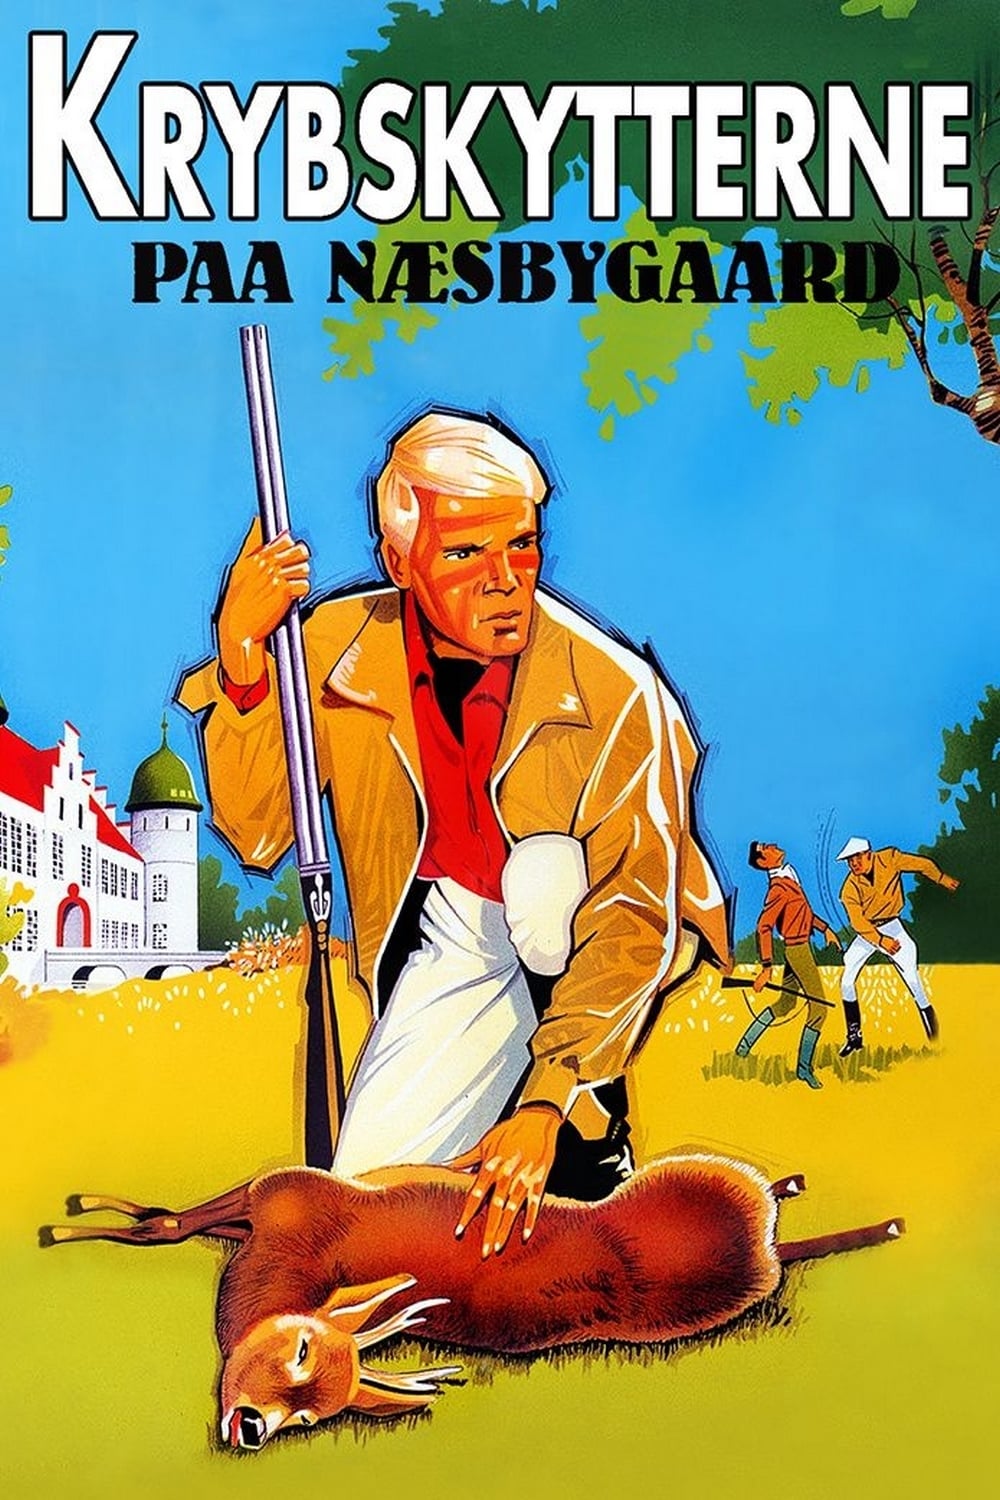 Krybskytterne paa Næsbygaard (1966)